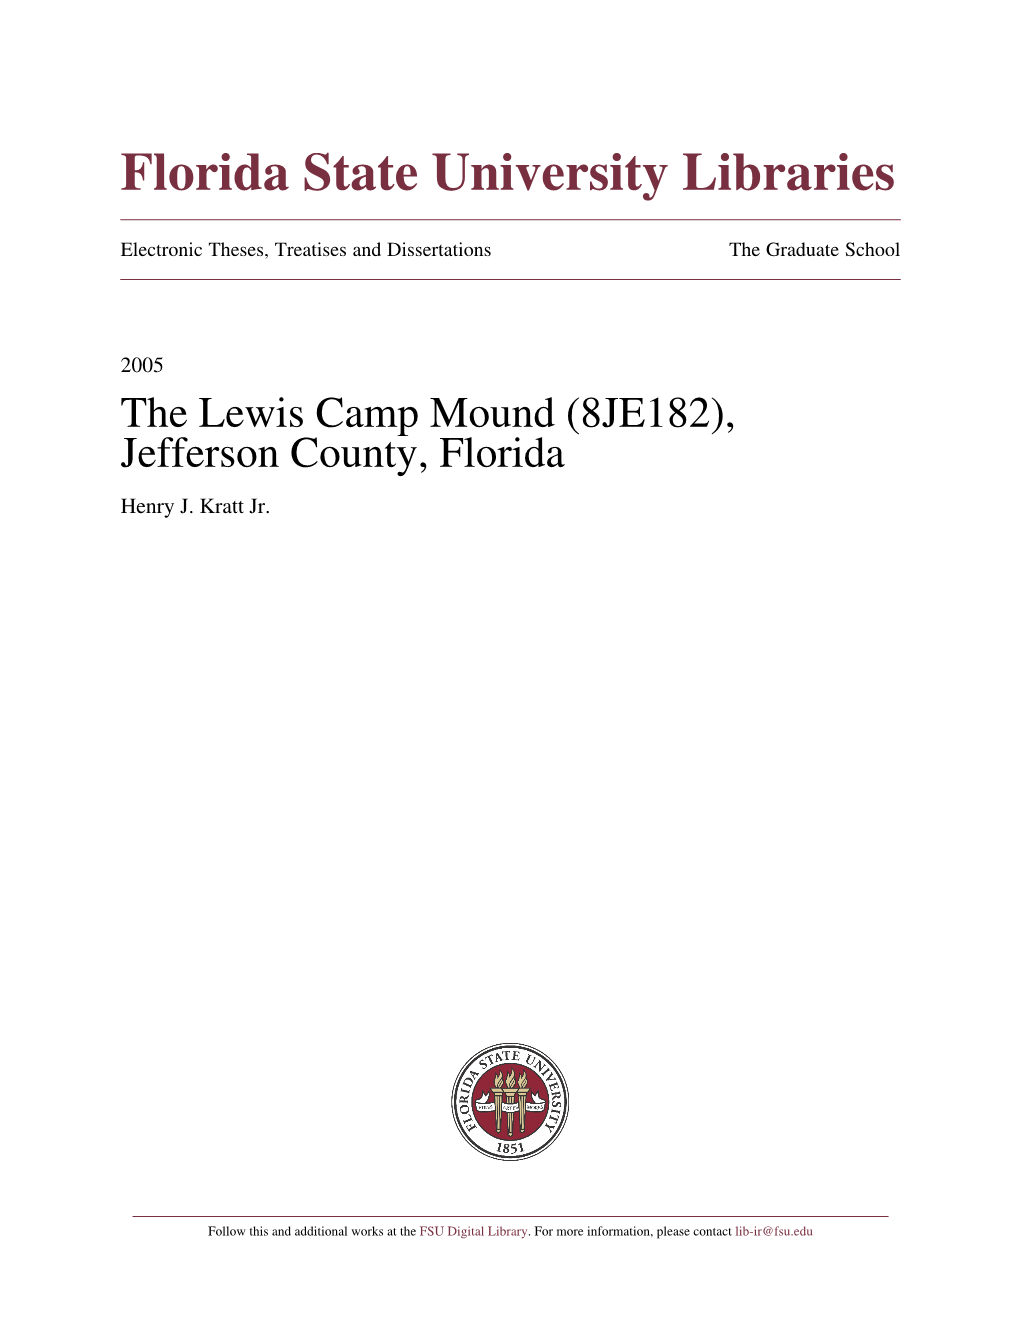 The Lewis Camp Mound (8JE182), Jefferson County, Florida Henry J